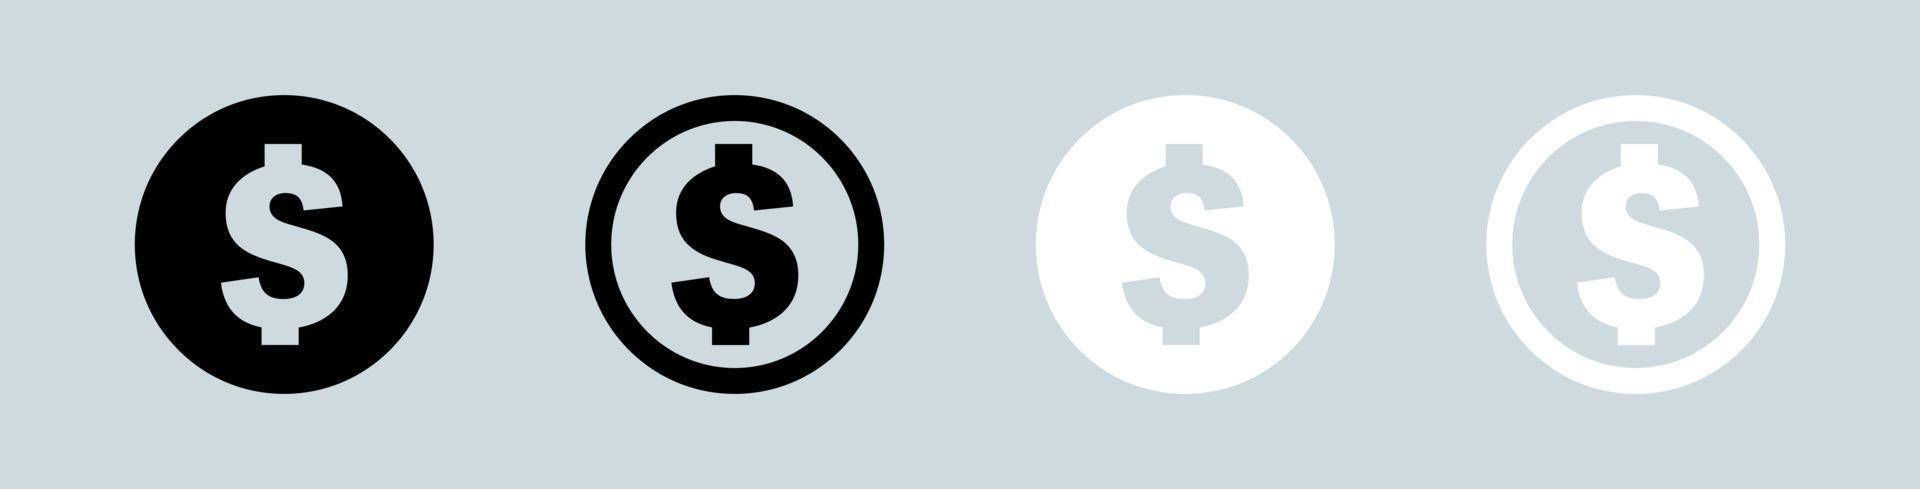 dollarbiljet pictogrammenset in cirkel zwart-witte kleuren. Amerikaanse valuta vector pictogram.